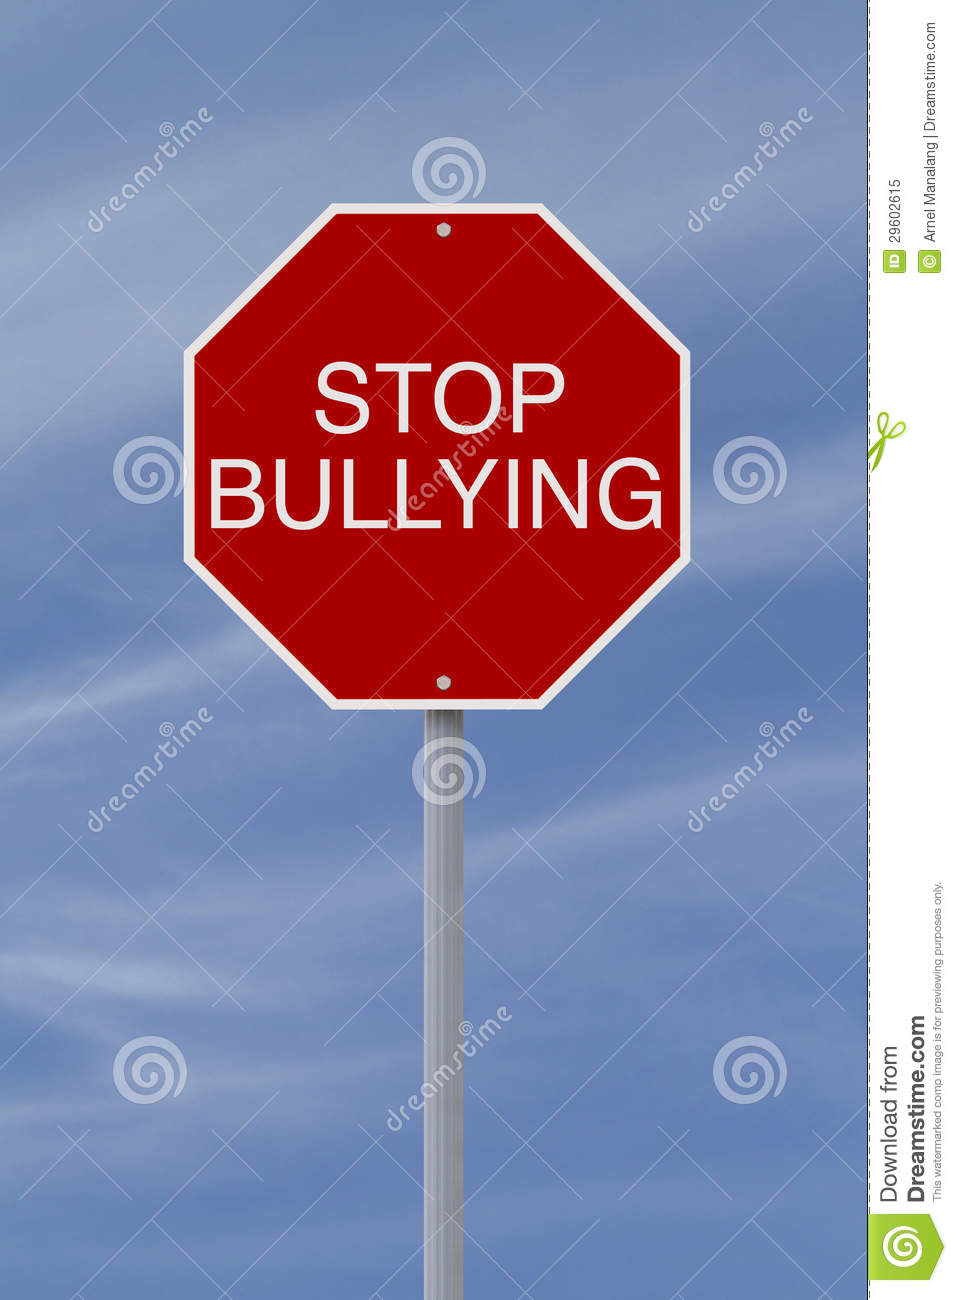 Stop Bullying Royalty Free Stock Photo   Image  29602615